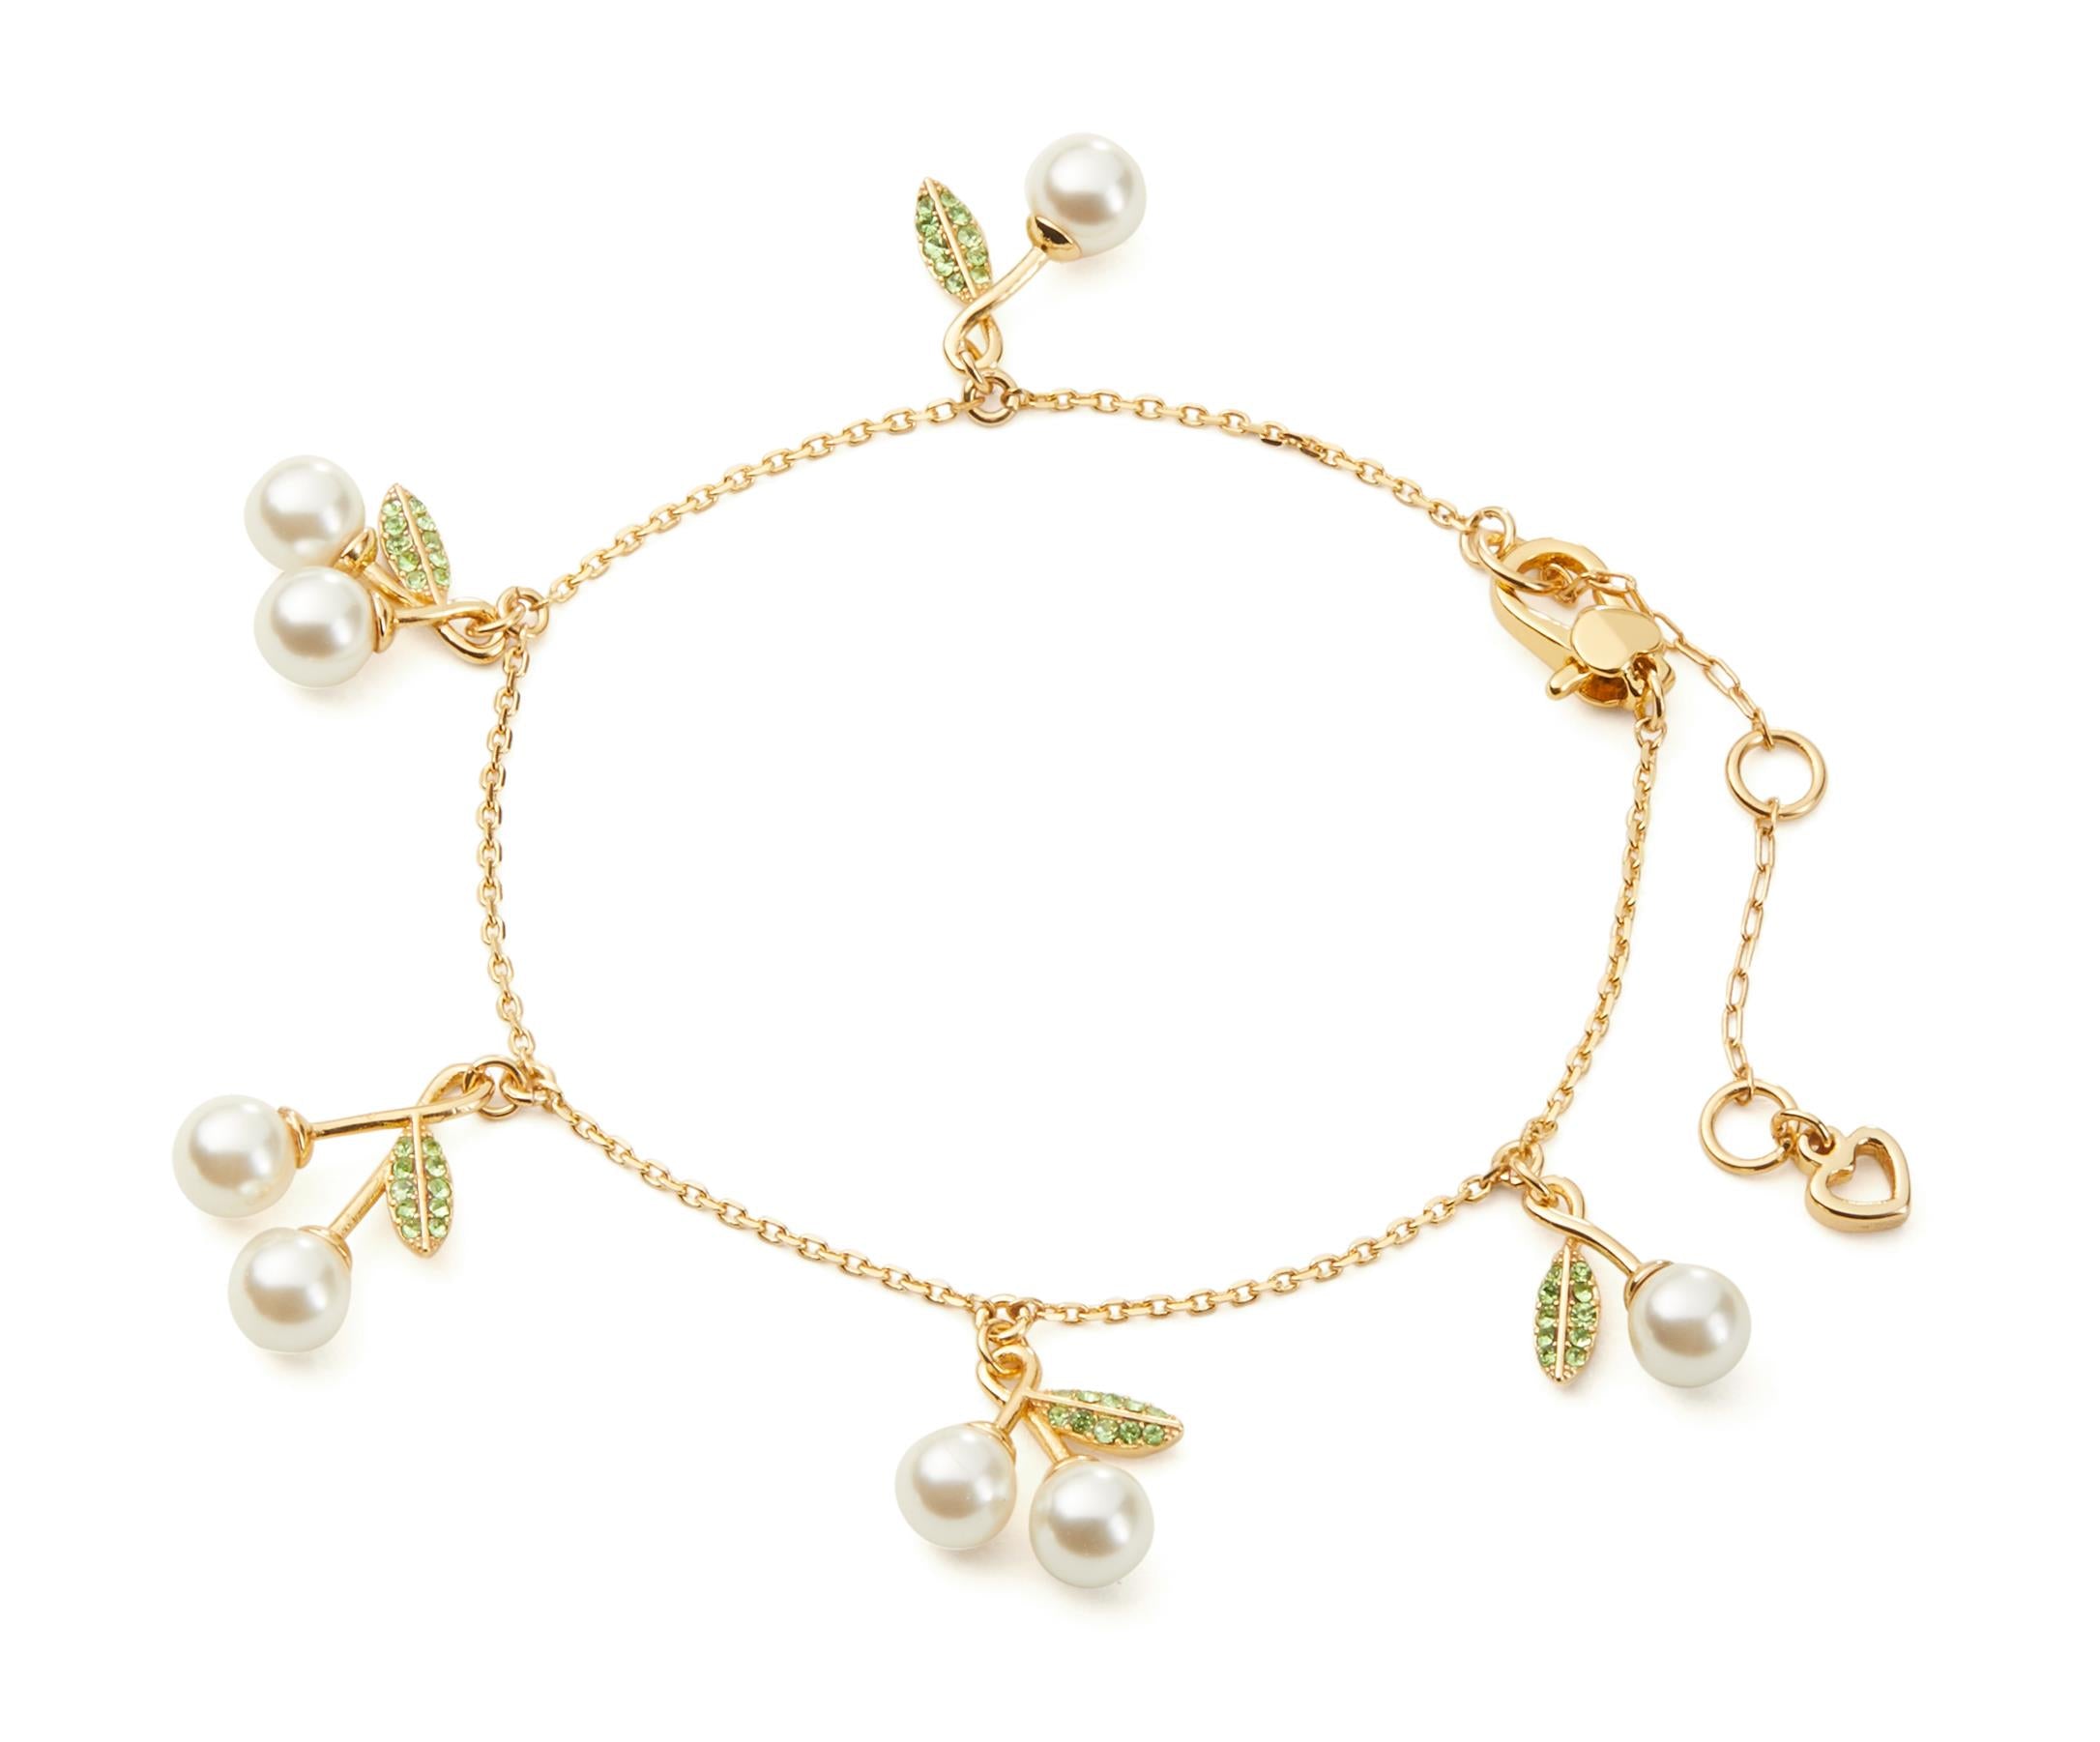 Kate Spade Cherie Cherry Charm Bracelet - Gold, Pearl